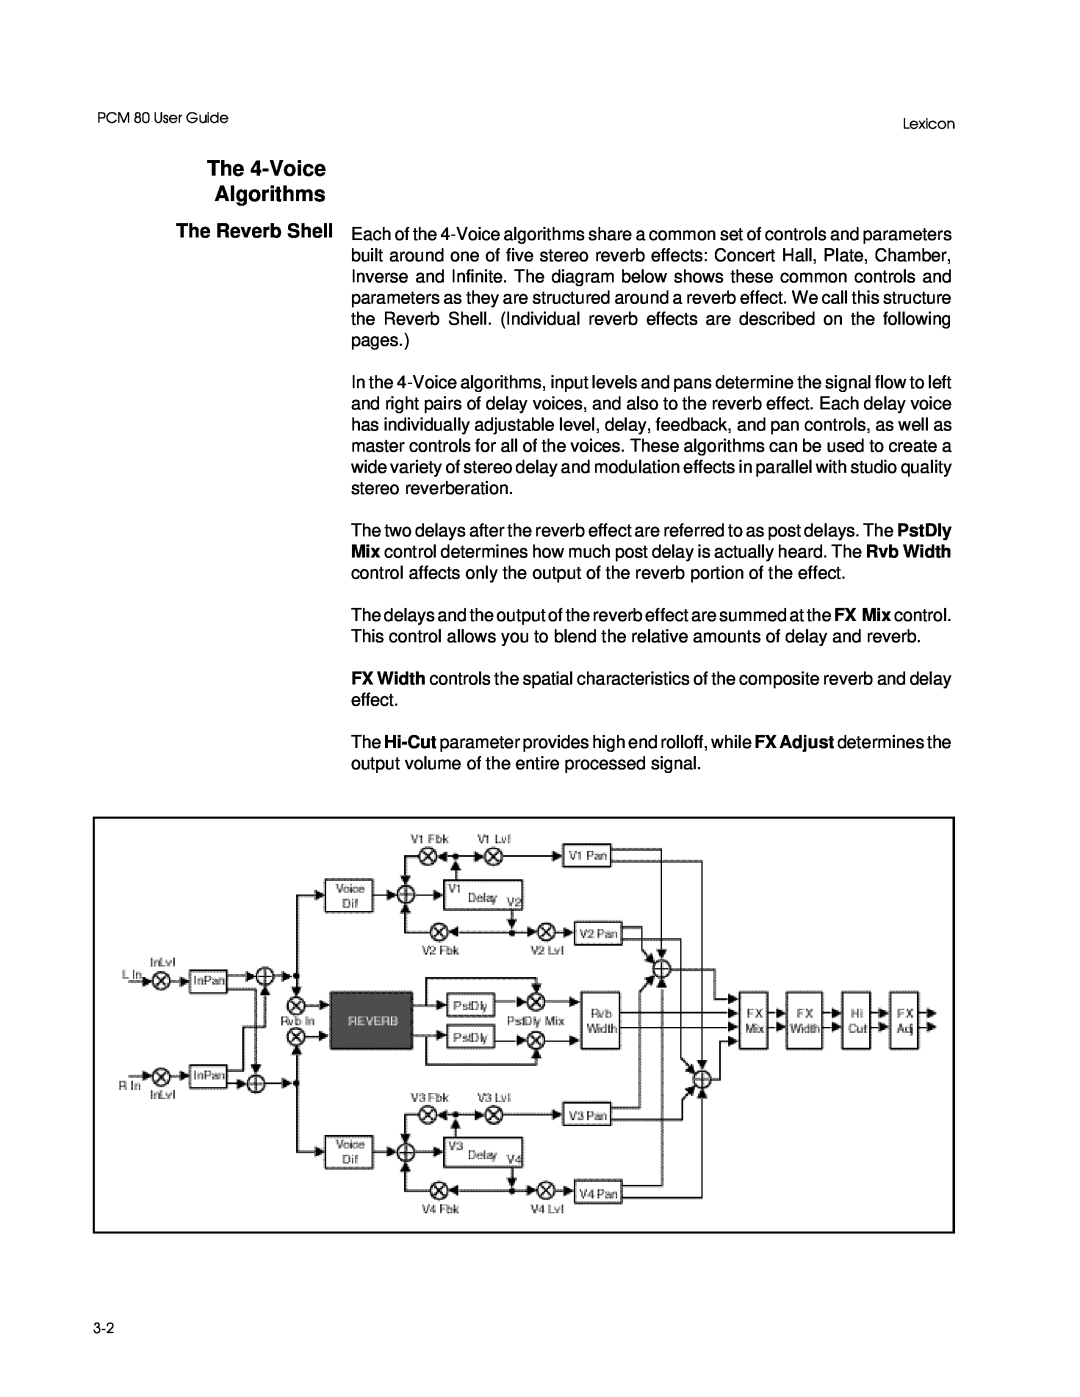 Lexicon manual The 4-VoiceAlgorithms The Reverb Shell, PCM 80 User Guide, Lexicon 